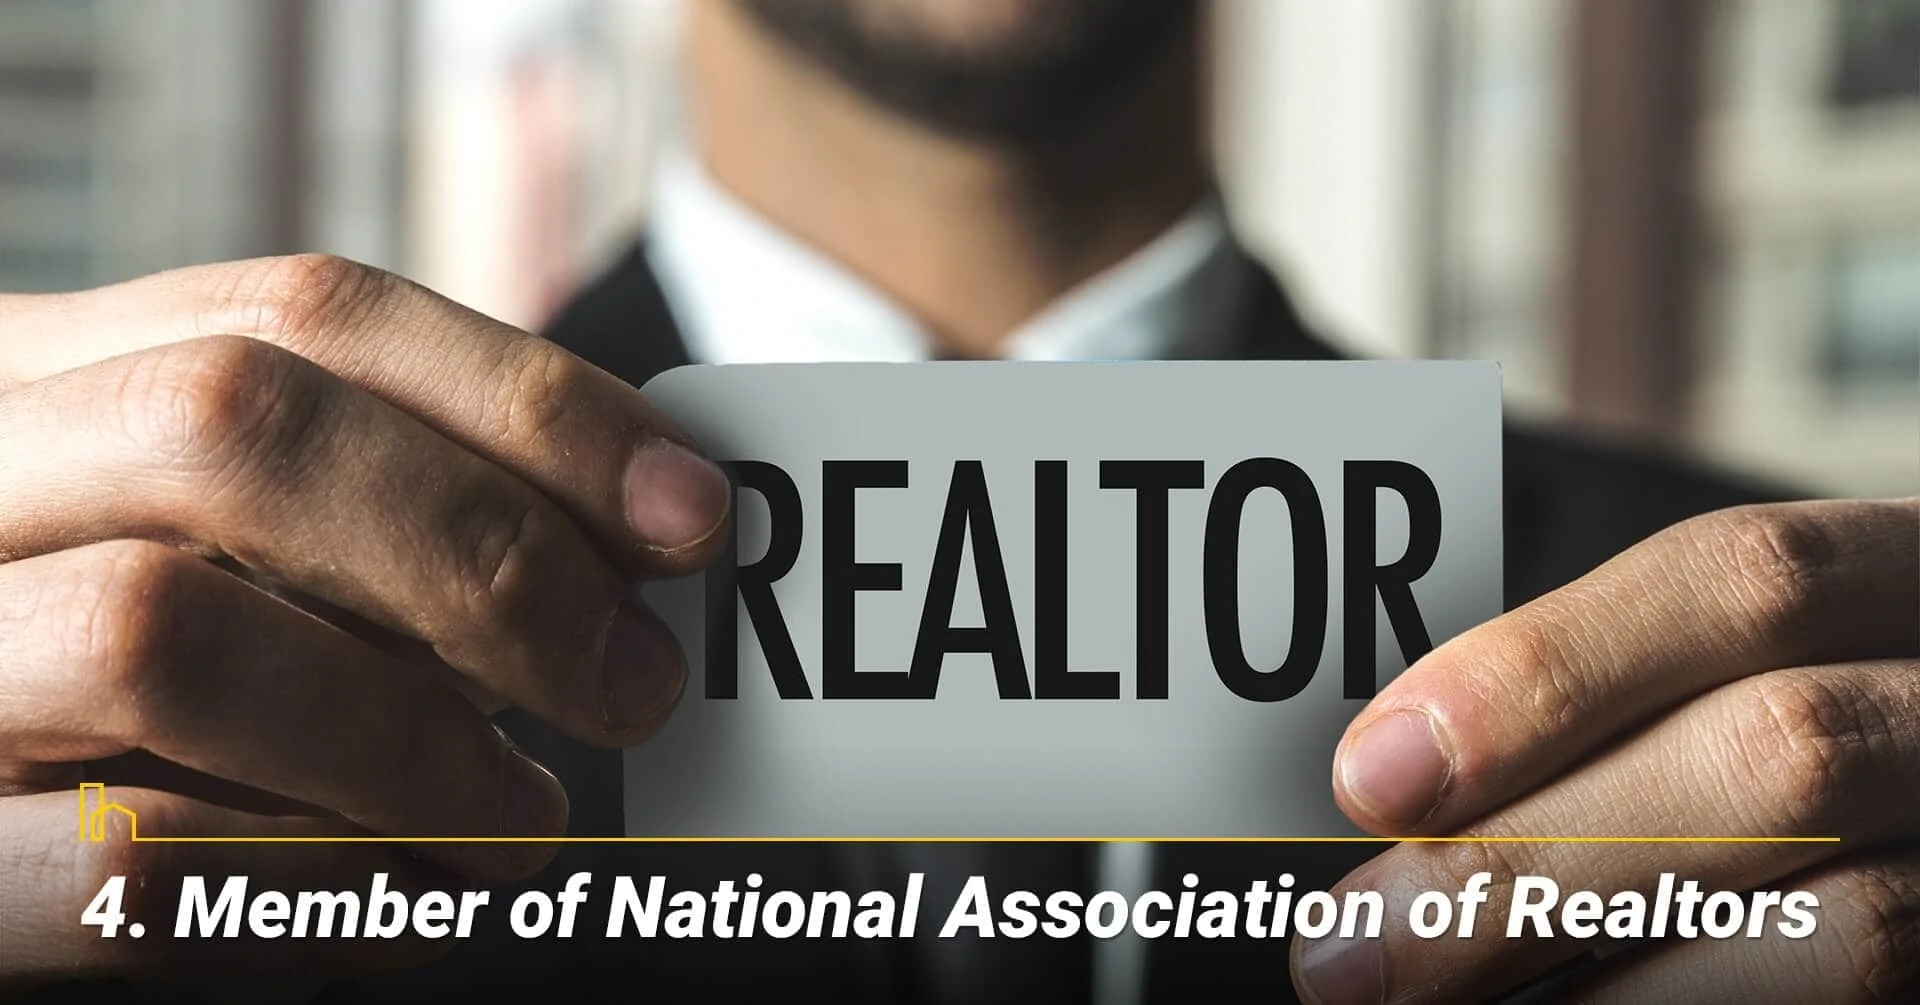 Member of National Association of Realtors, being a member of highly regard associations